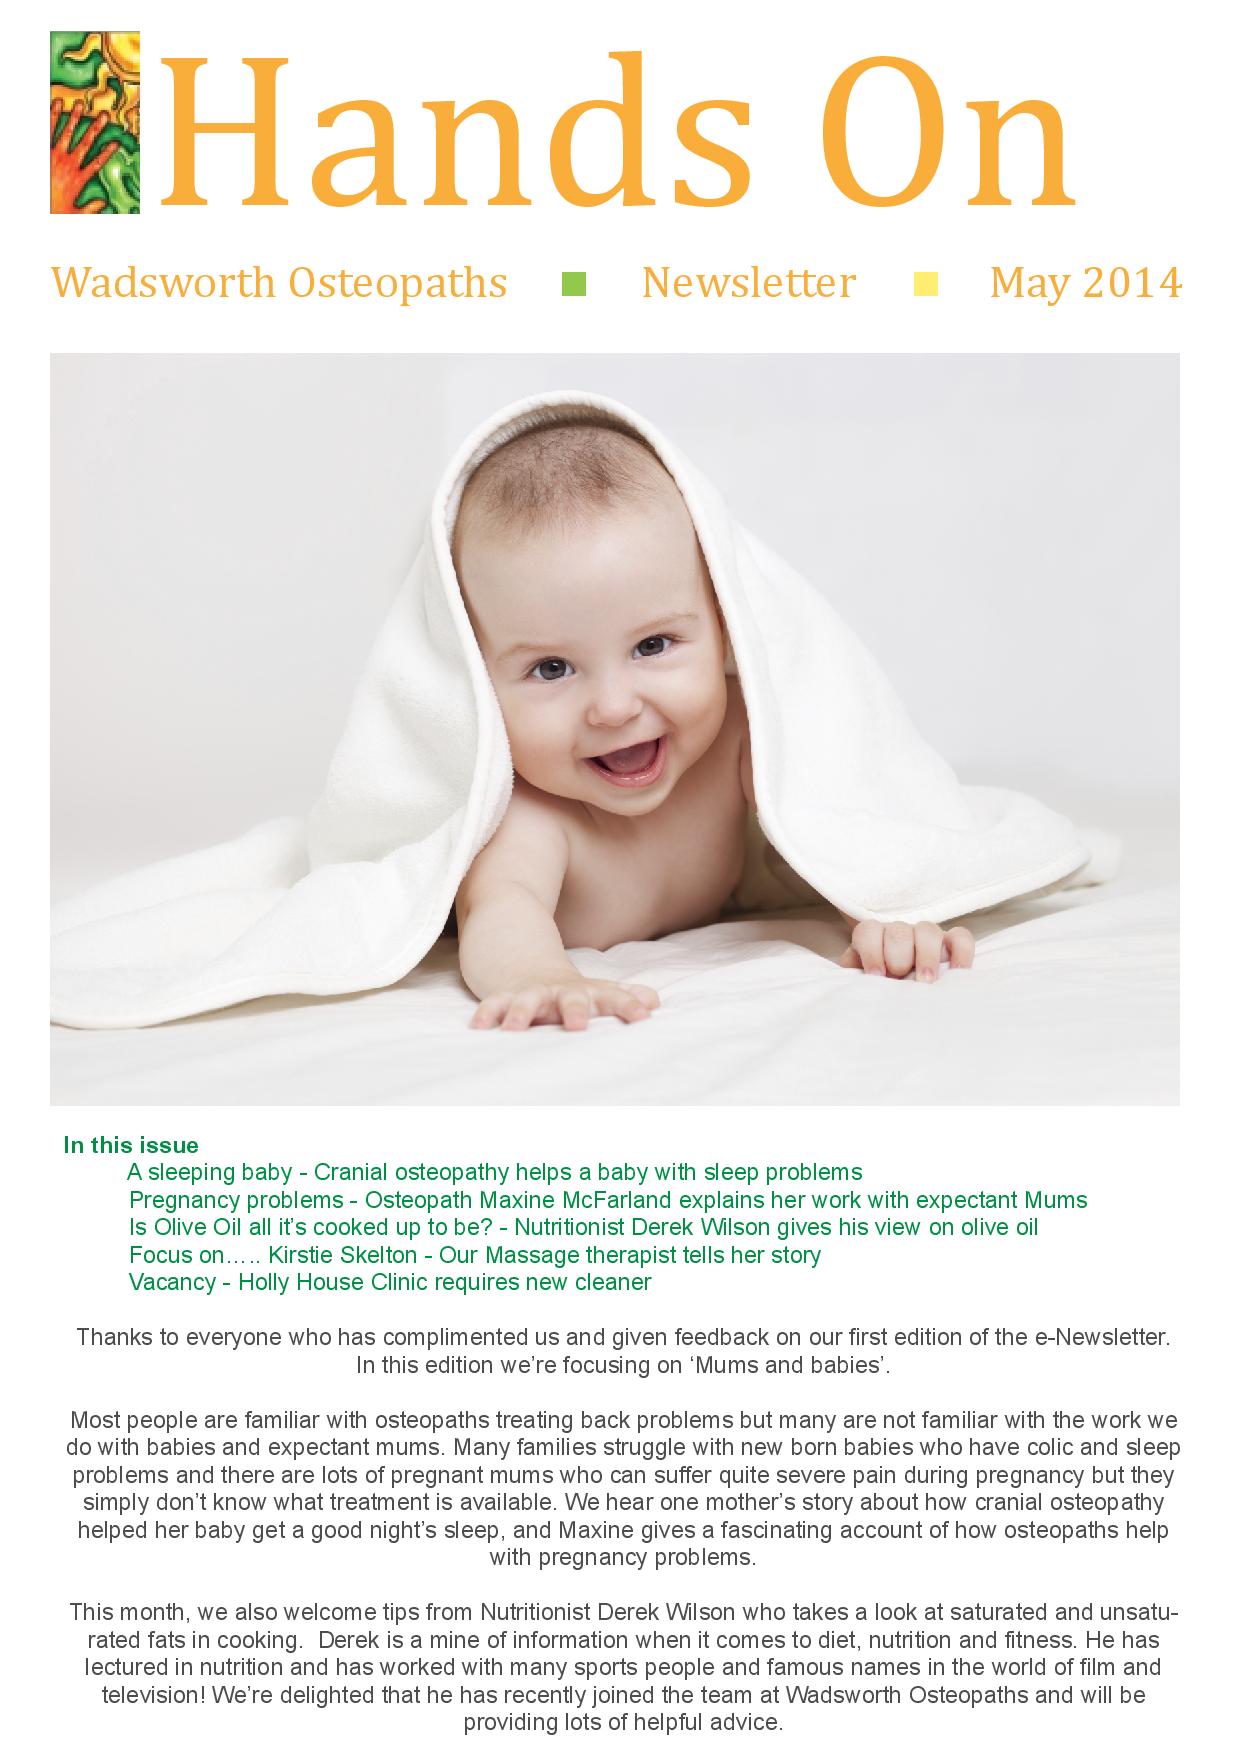 Wadsworth Osteopaths - mums & babies newsletter